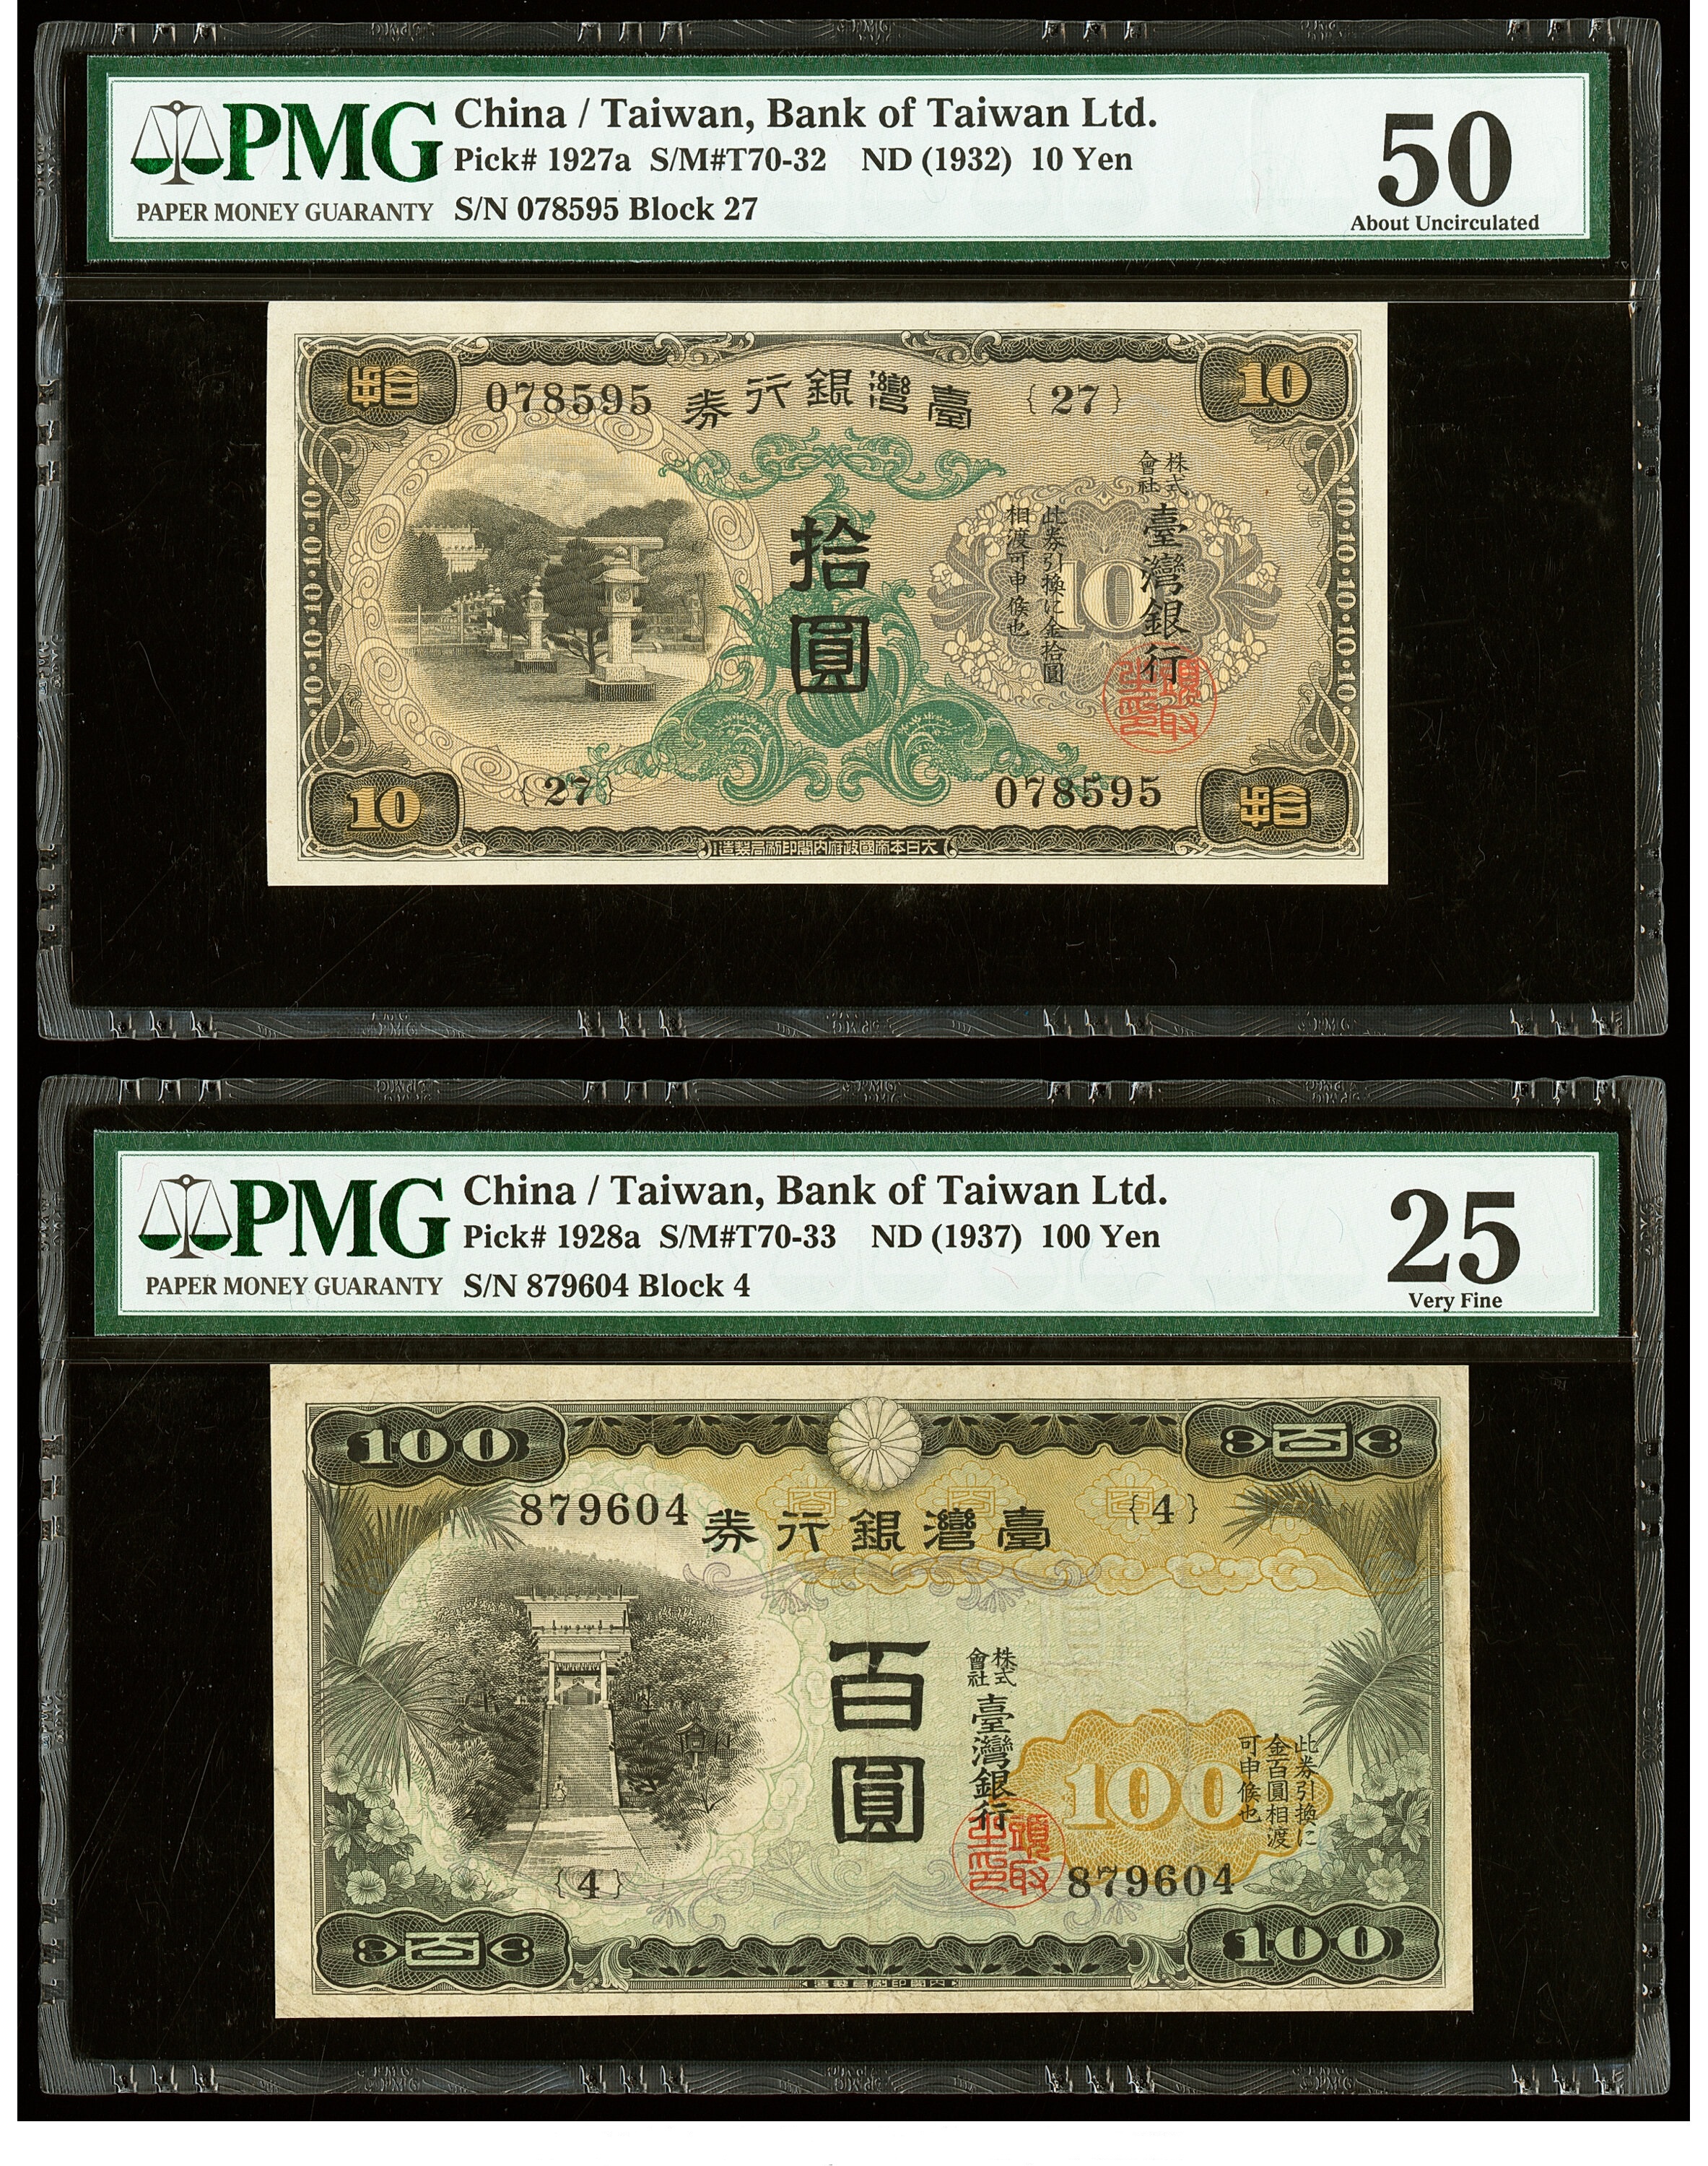 CC071 China Bank of Taiwan Limited 10 and 100 Yen ND (1932); ND